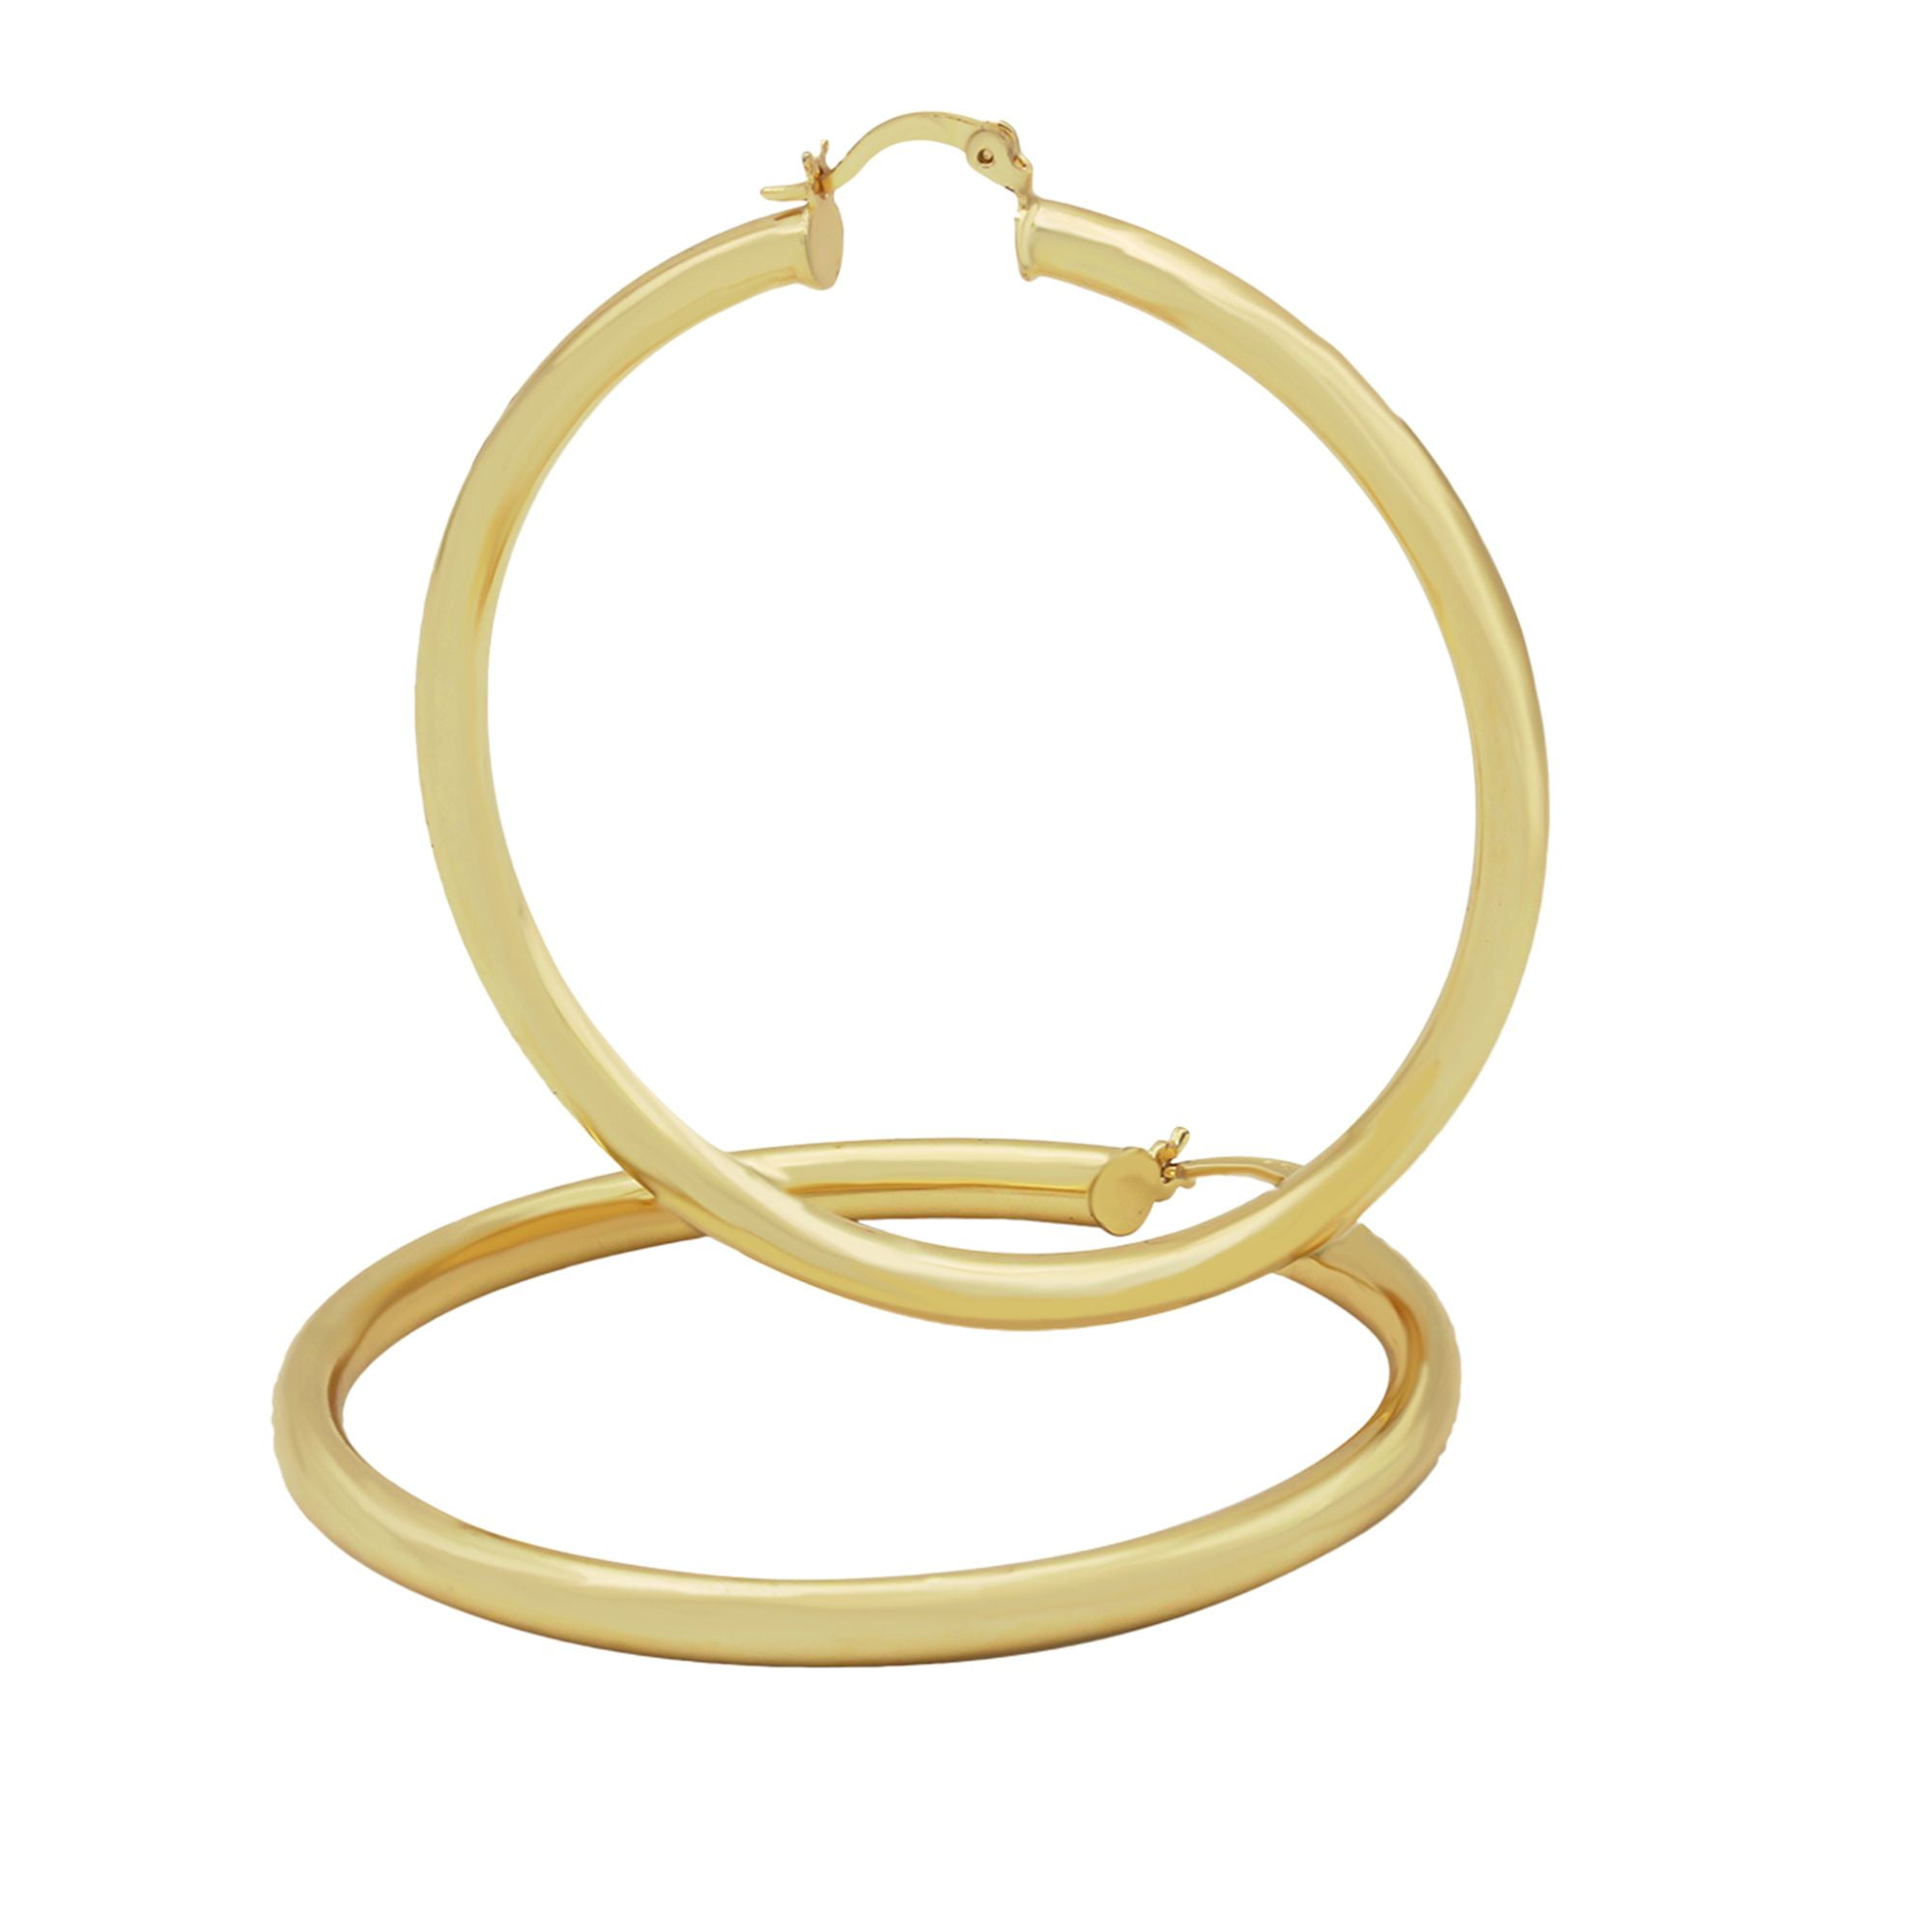 Gold Hoop Earrings,60MM Big 14K Gold Plated C-hoop Earrings with Cubic Zirconia for Women Girls Sensitive Ears Hypoallergenic Jewelry 